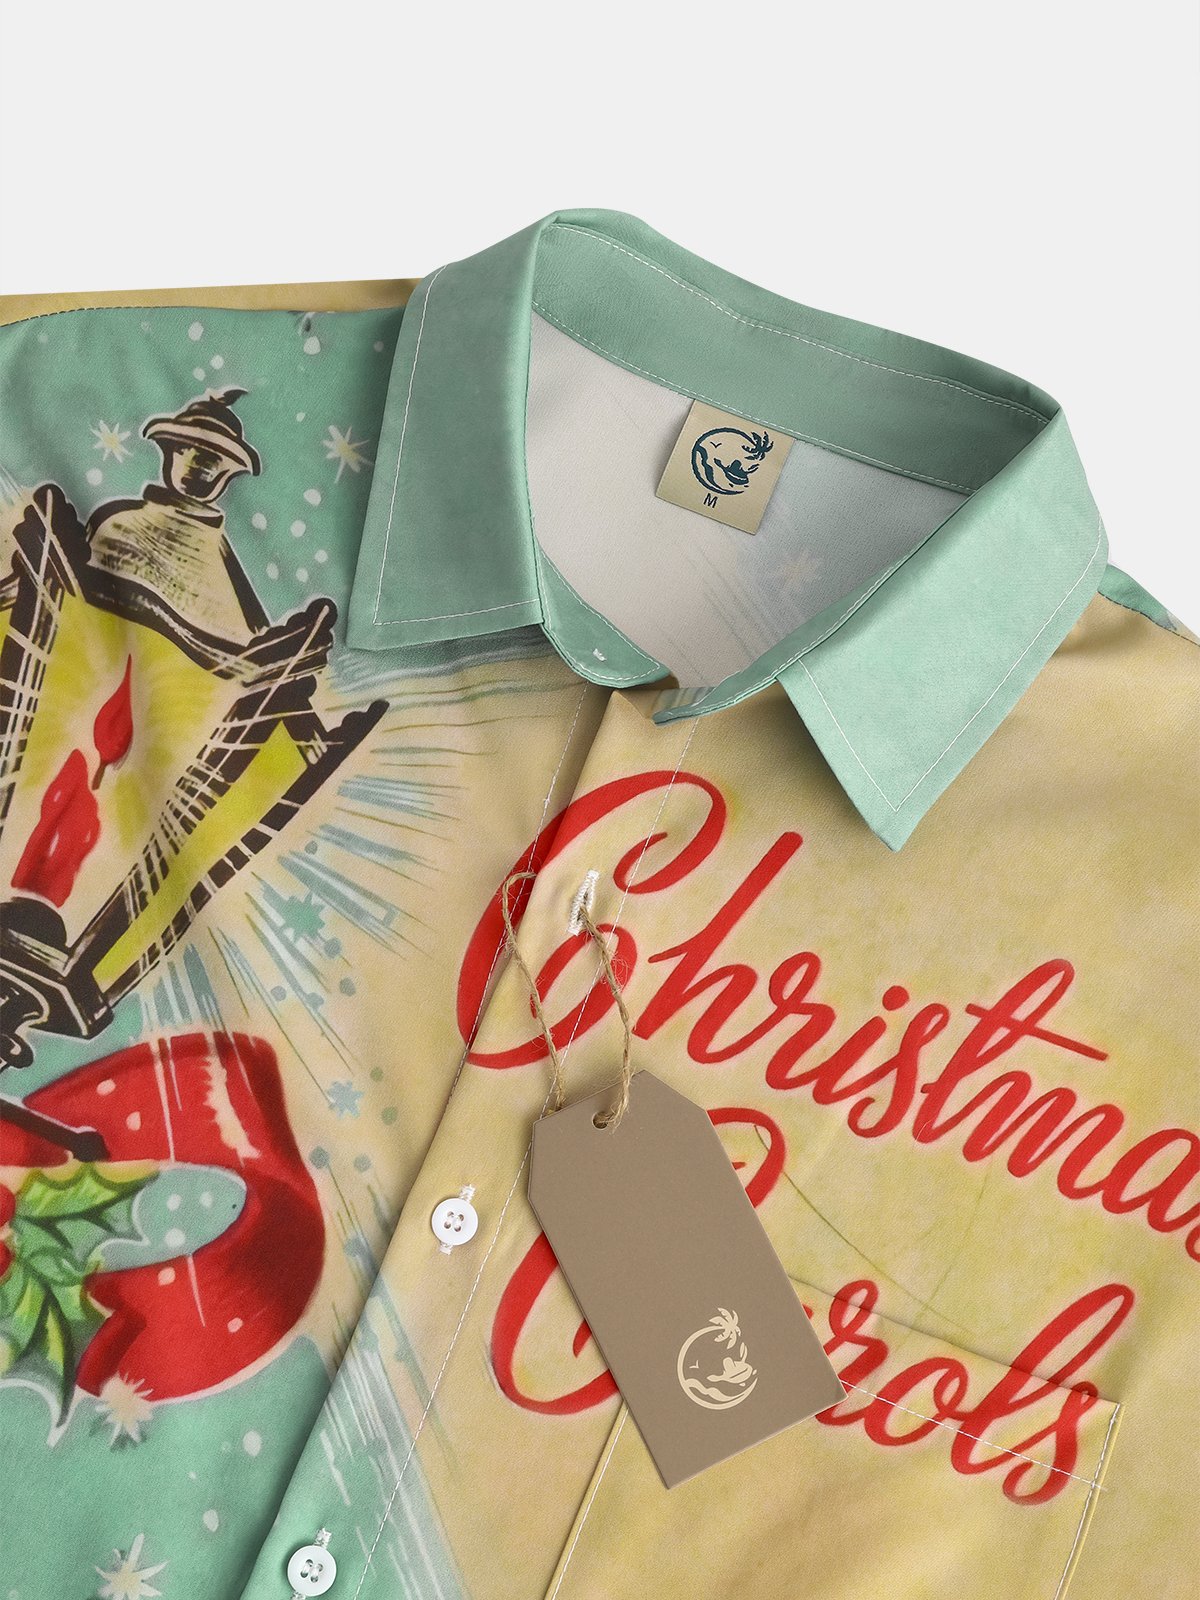 Men's Christmas Print Casual Short Sleeve Hawaiian Shirt with Chest Pocket